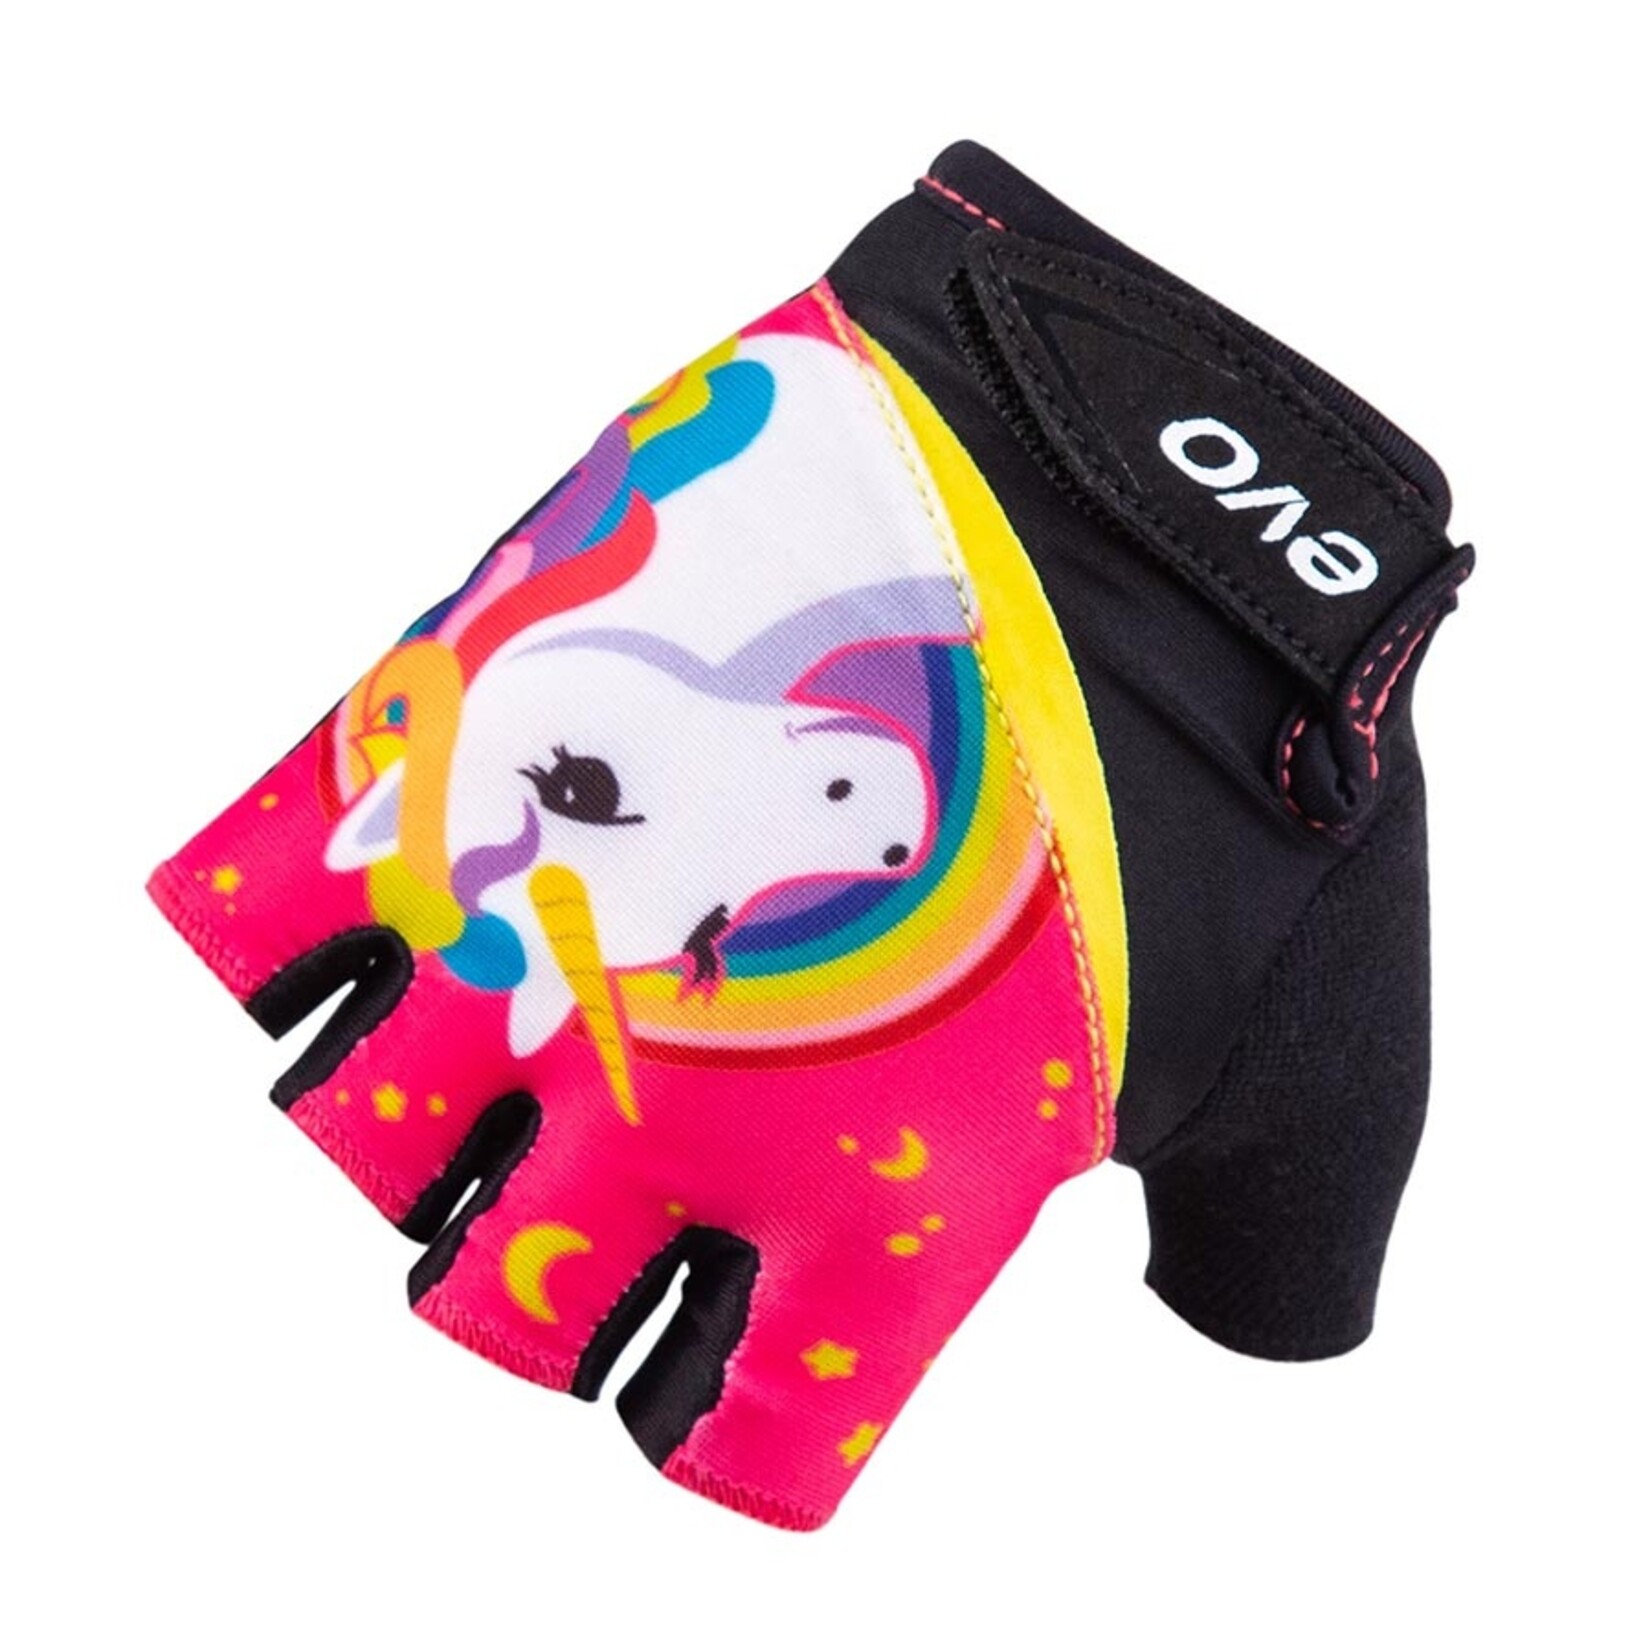 Evo Evo Palmer Half-finger Kids Gloves